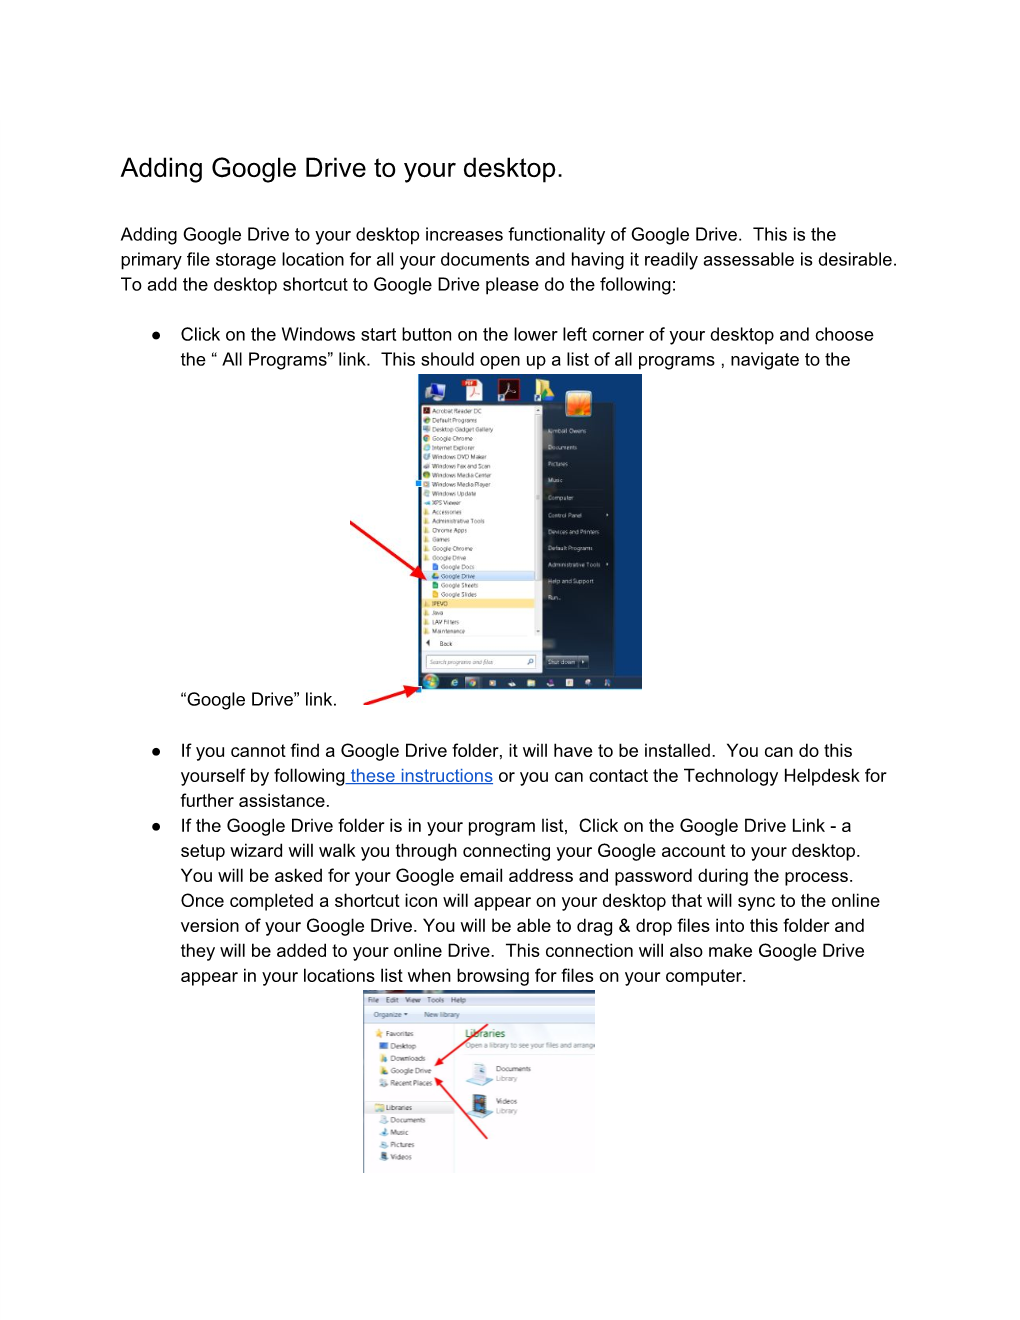 Adding Google Drive to Your Desktop